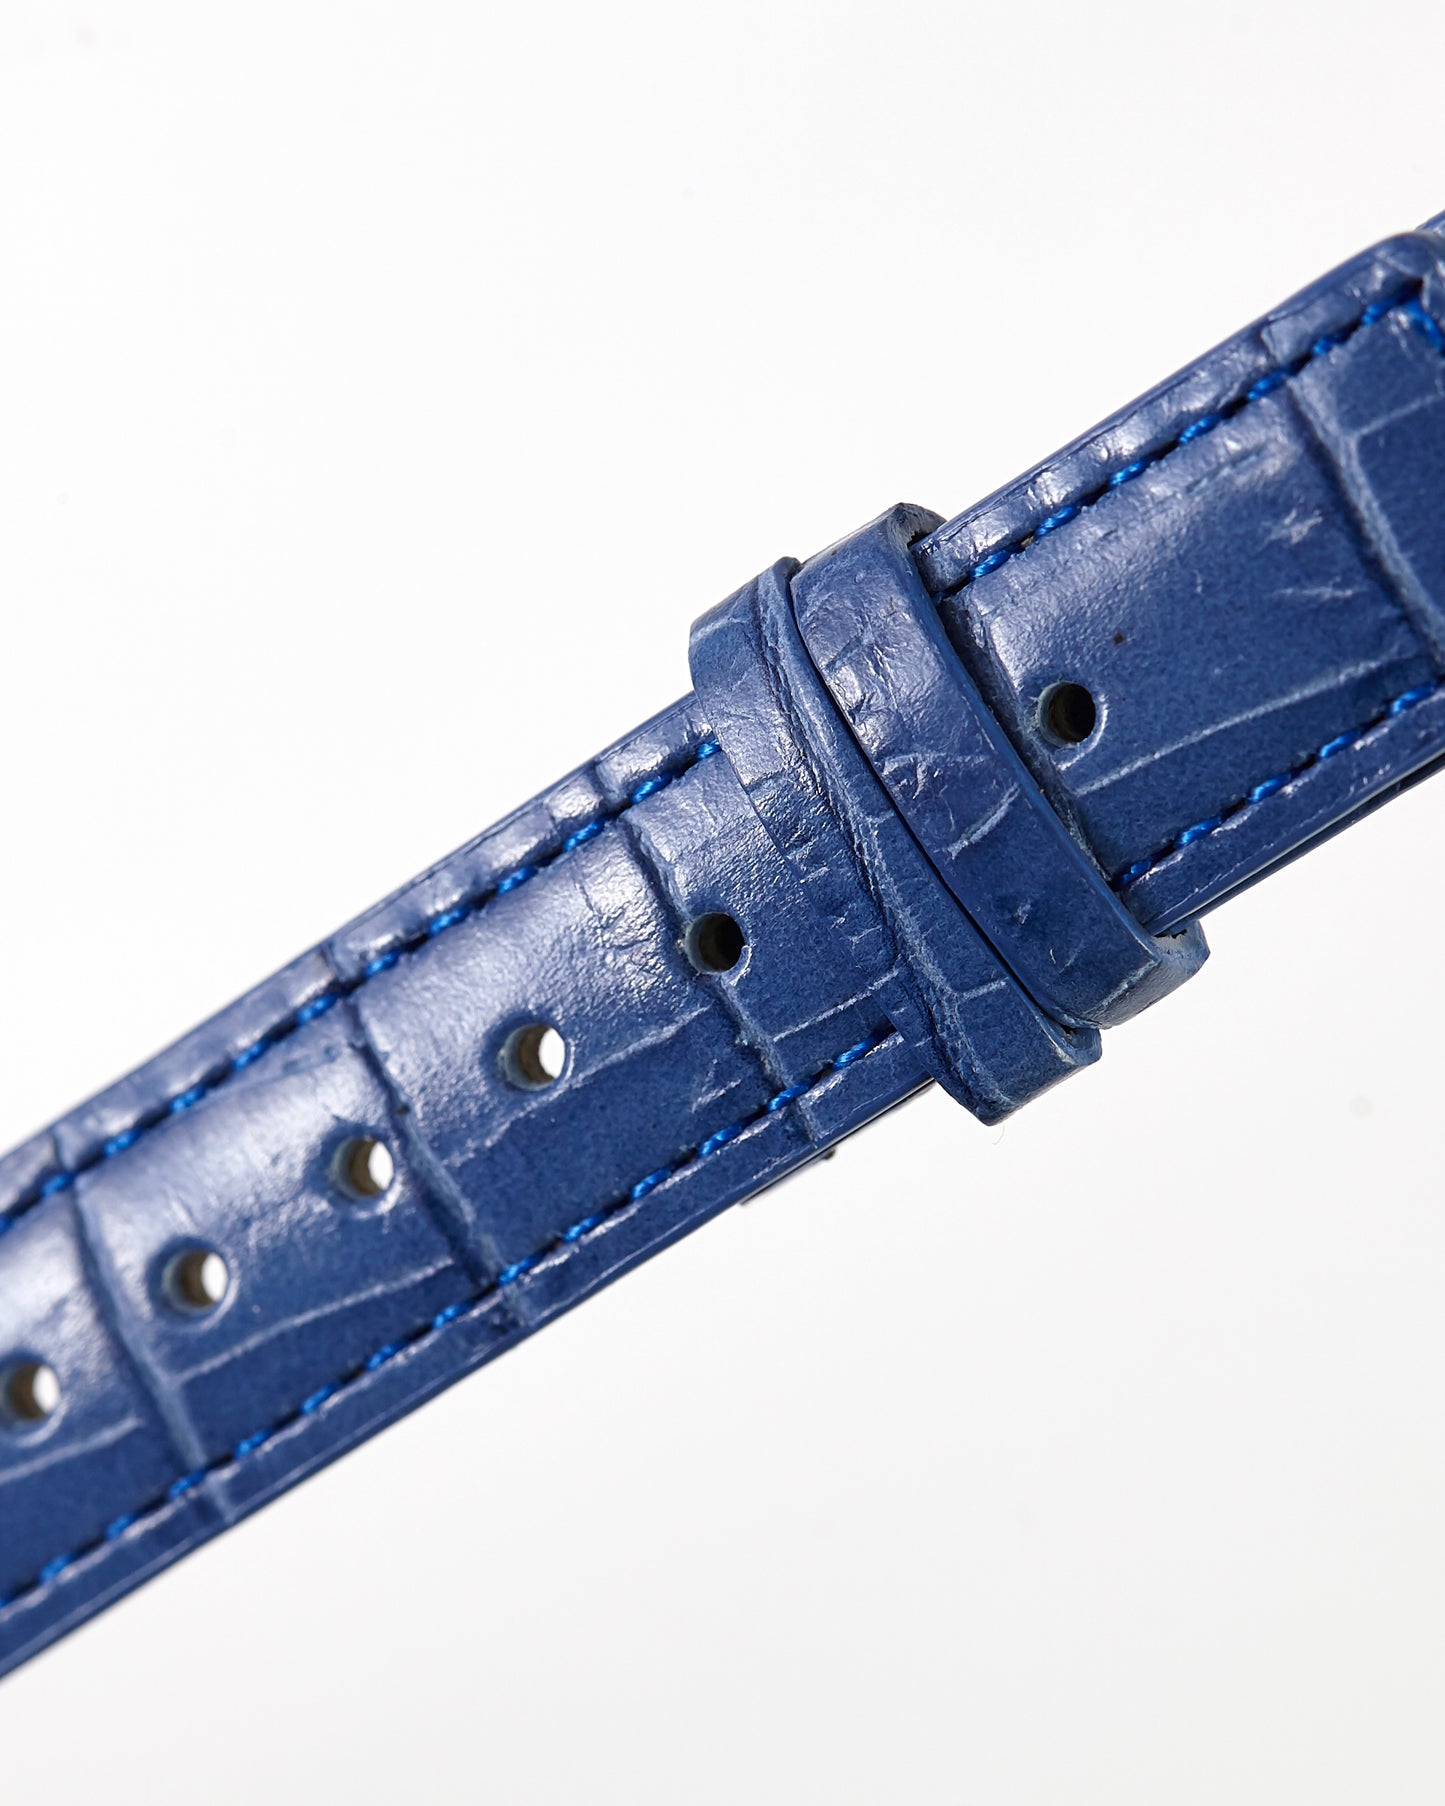 Ecclissi 14mm x 14mm Blue Alligator Grain Leather Strap 22120